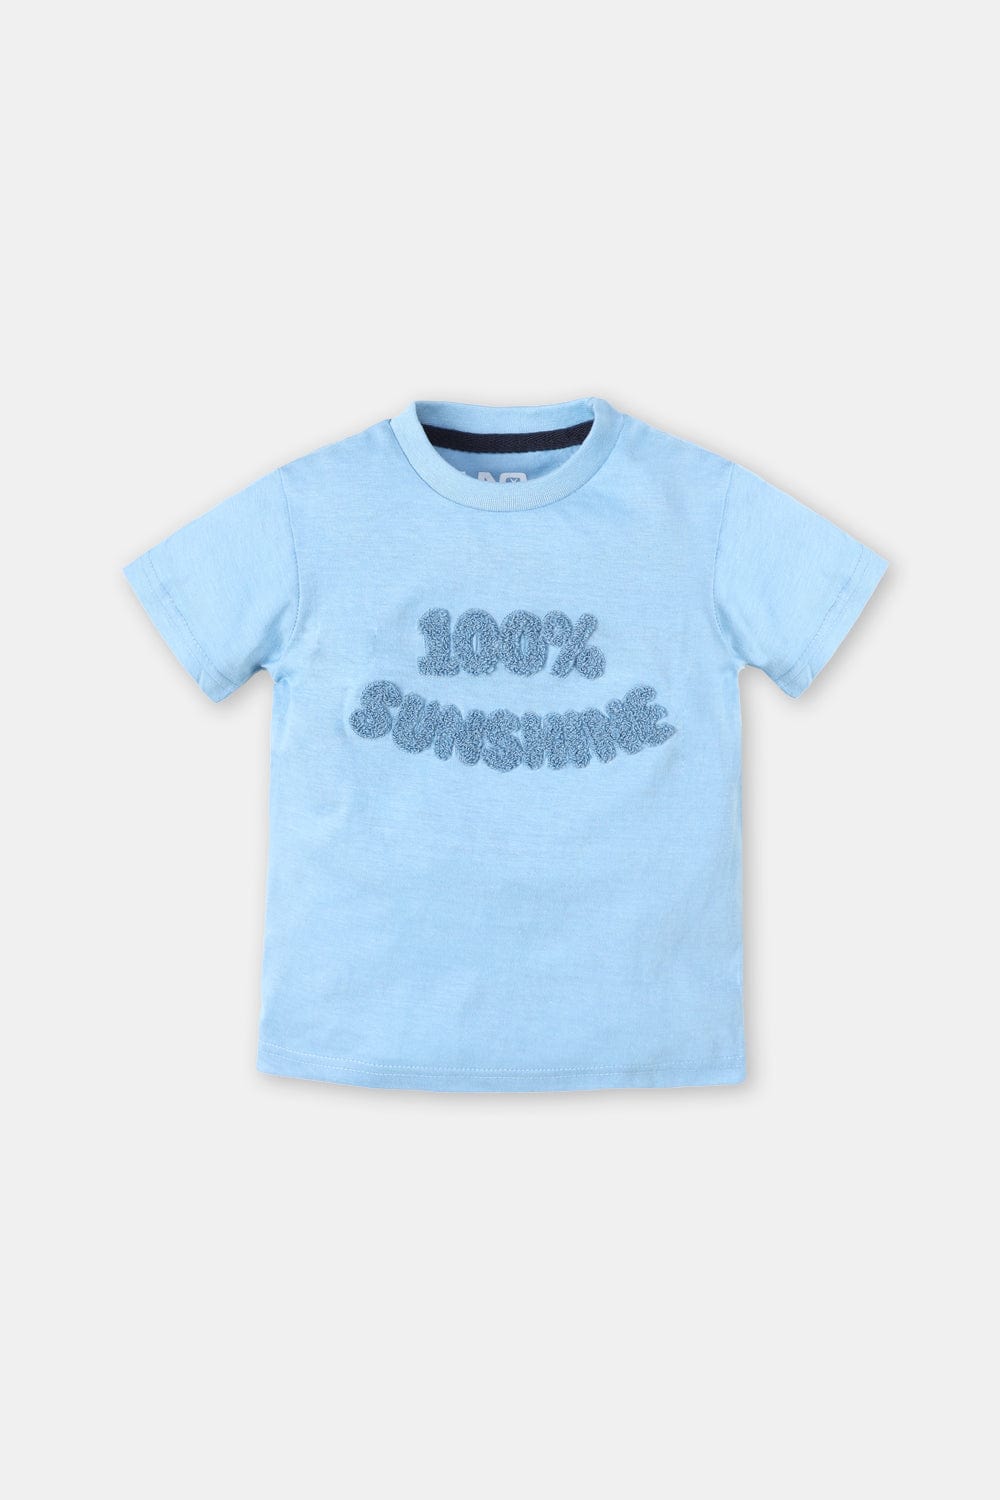 Hope Not Out by Shahid Afridi Boys Knit T-Shirt Boys' Sky Blue Sunshine Puff Print Half Sleeve Tee